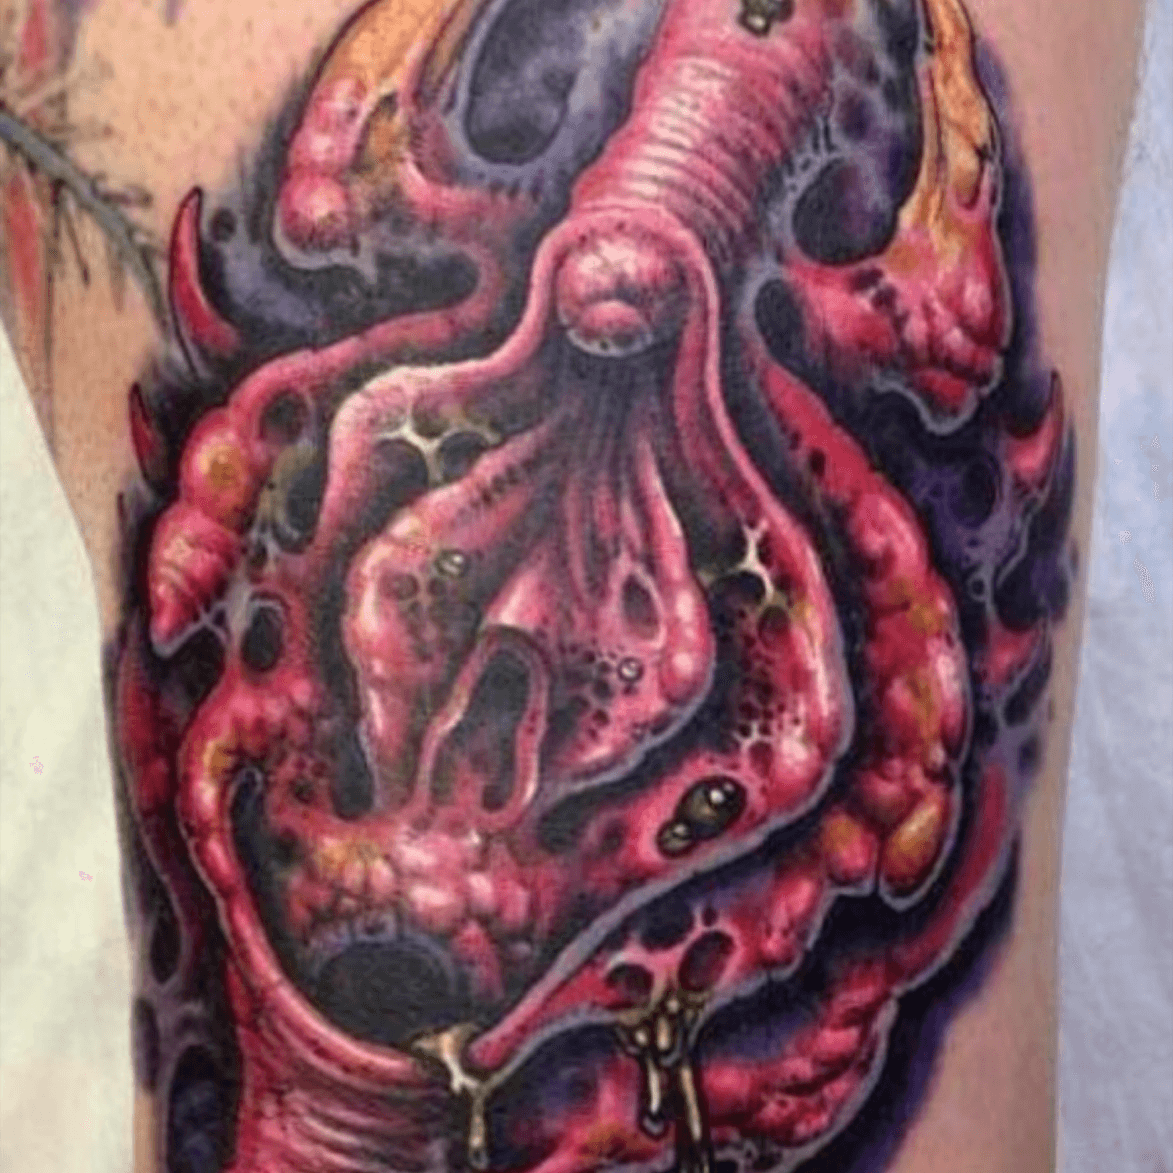 Tattoo uploaded by Orrin Hurley • Biomechanical vagina • Tattoodo